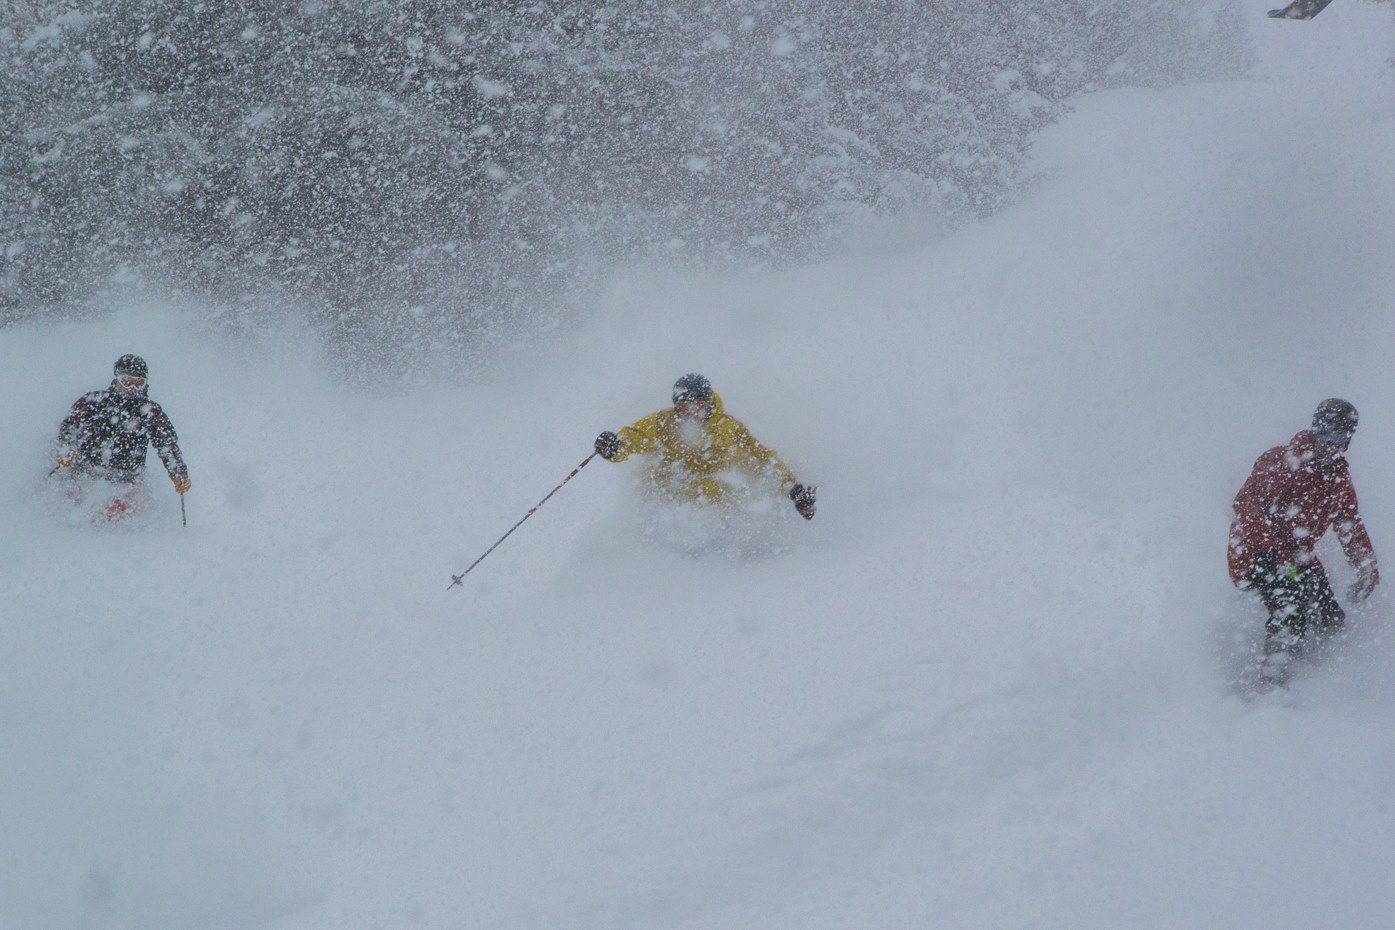 Quebec Ski Resort Sets New Snowfall Record